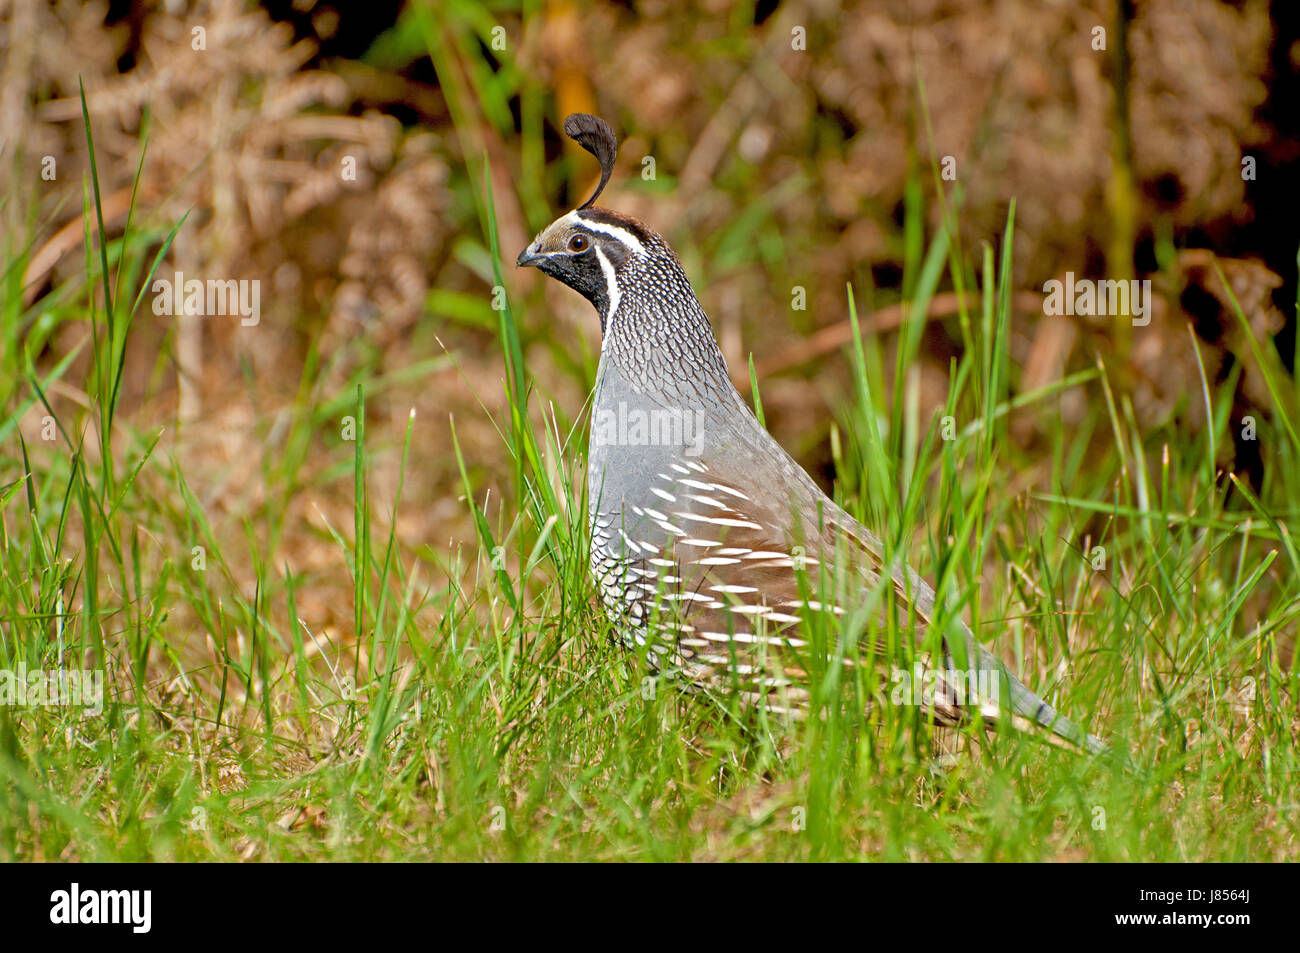 bird fauna birds new zealand wildlife chicken quail animal bird fauna animals Stock Photo